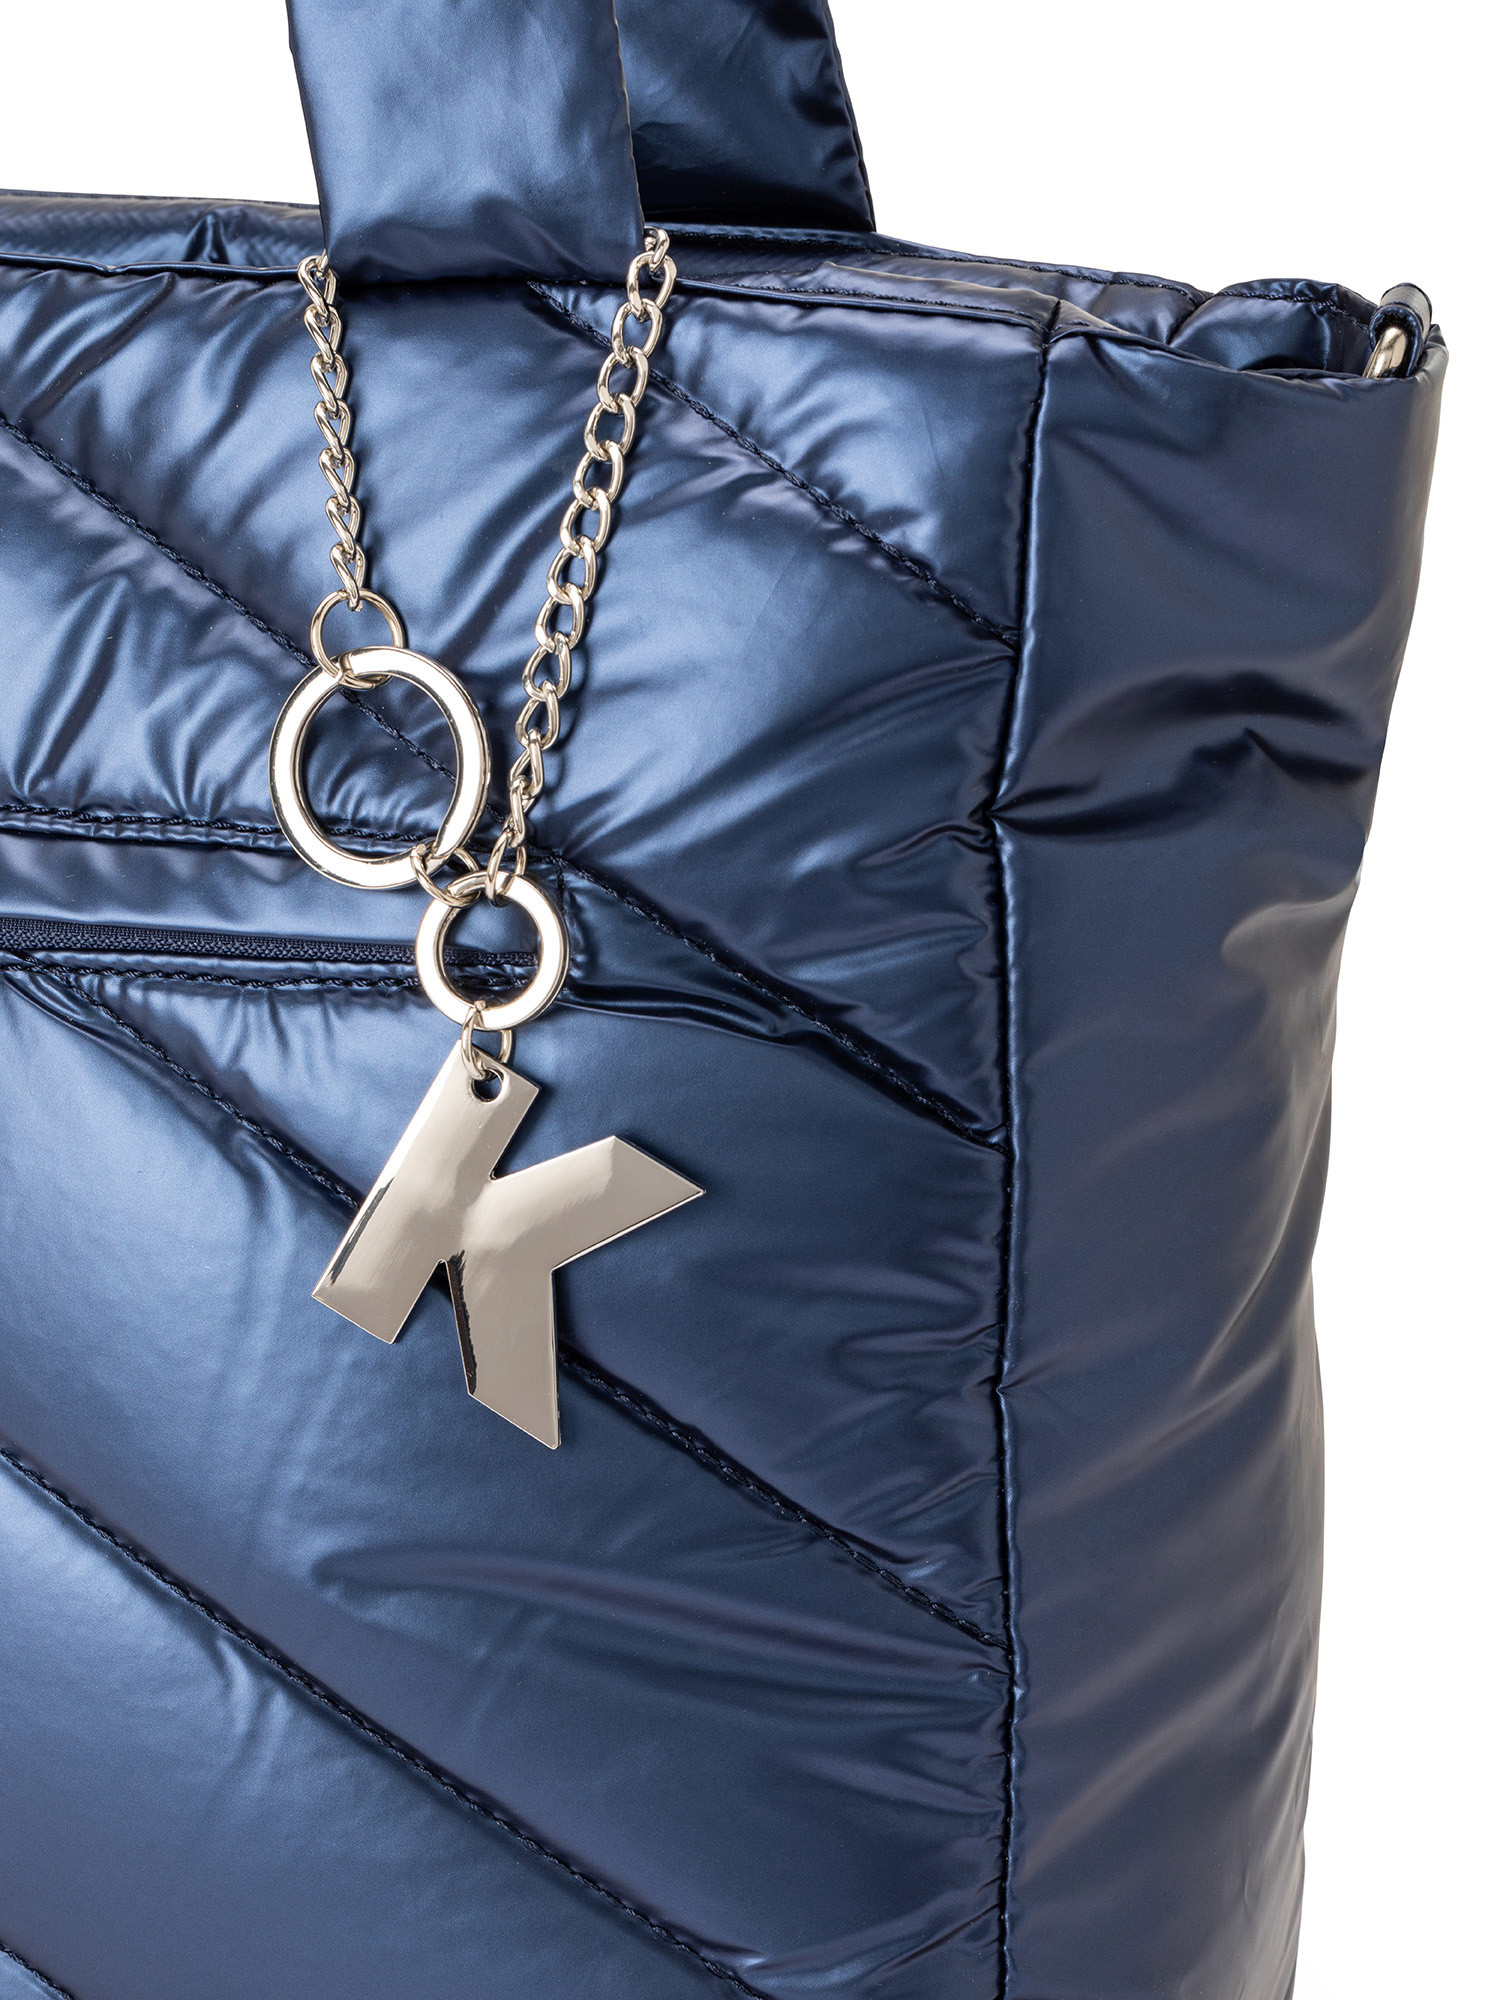 Koan - Nylon shopping bag, Blue, large image number 2